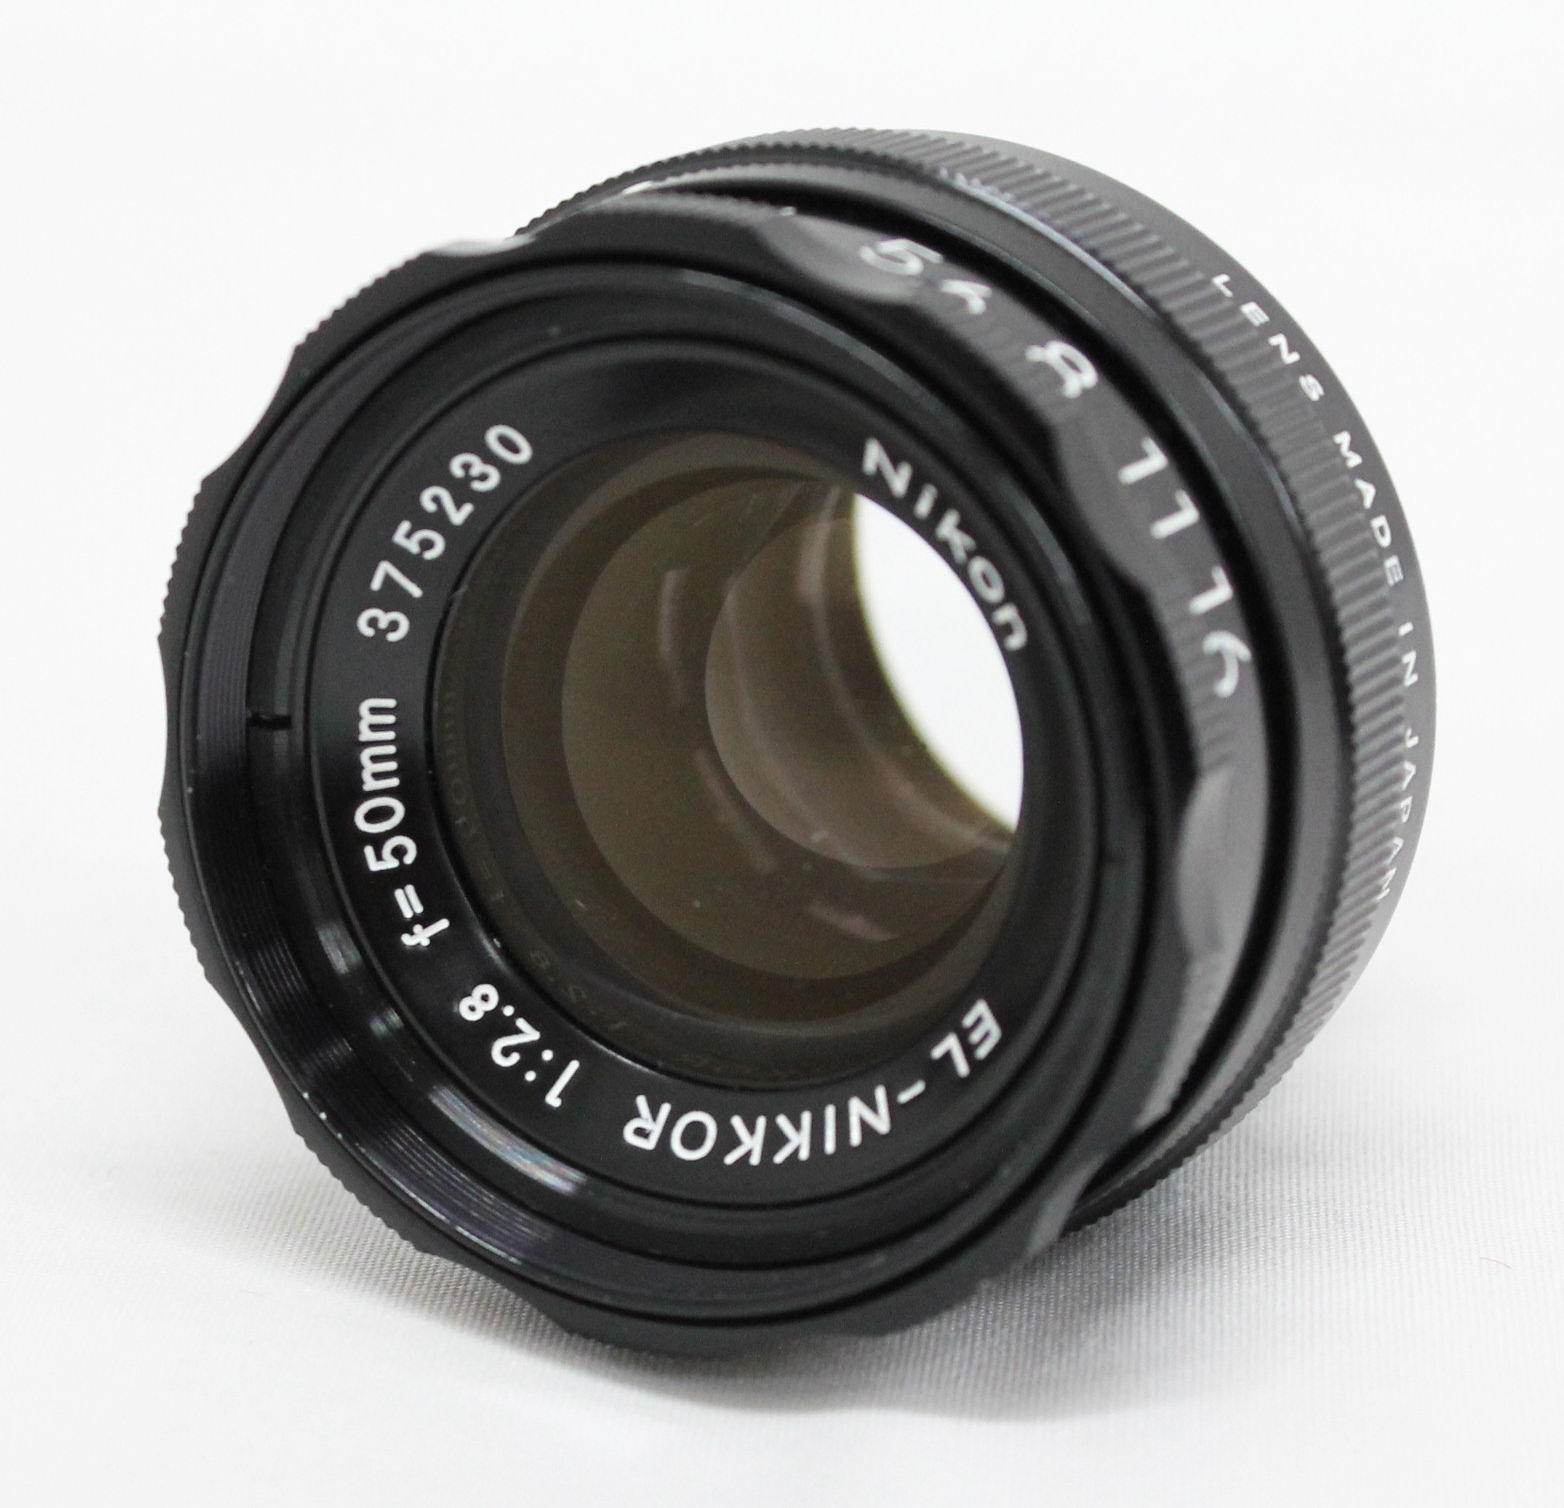 Japan Used Camera Shop | [Near Mint] Nikon EL Nikkor 50mm F/2.8 Enlarging Lens from Japan